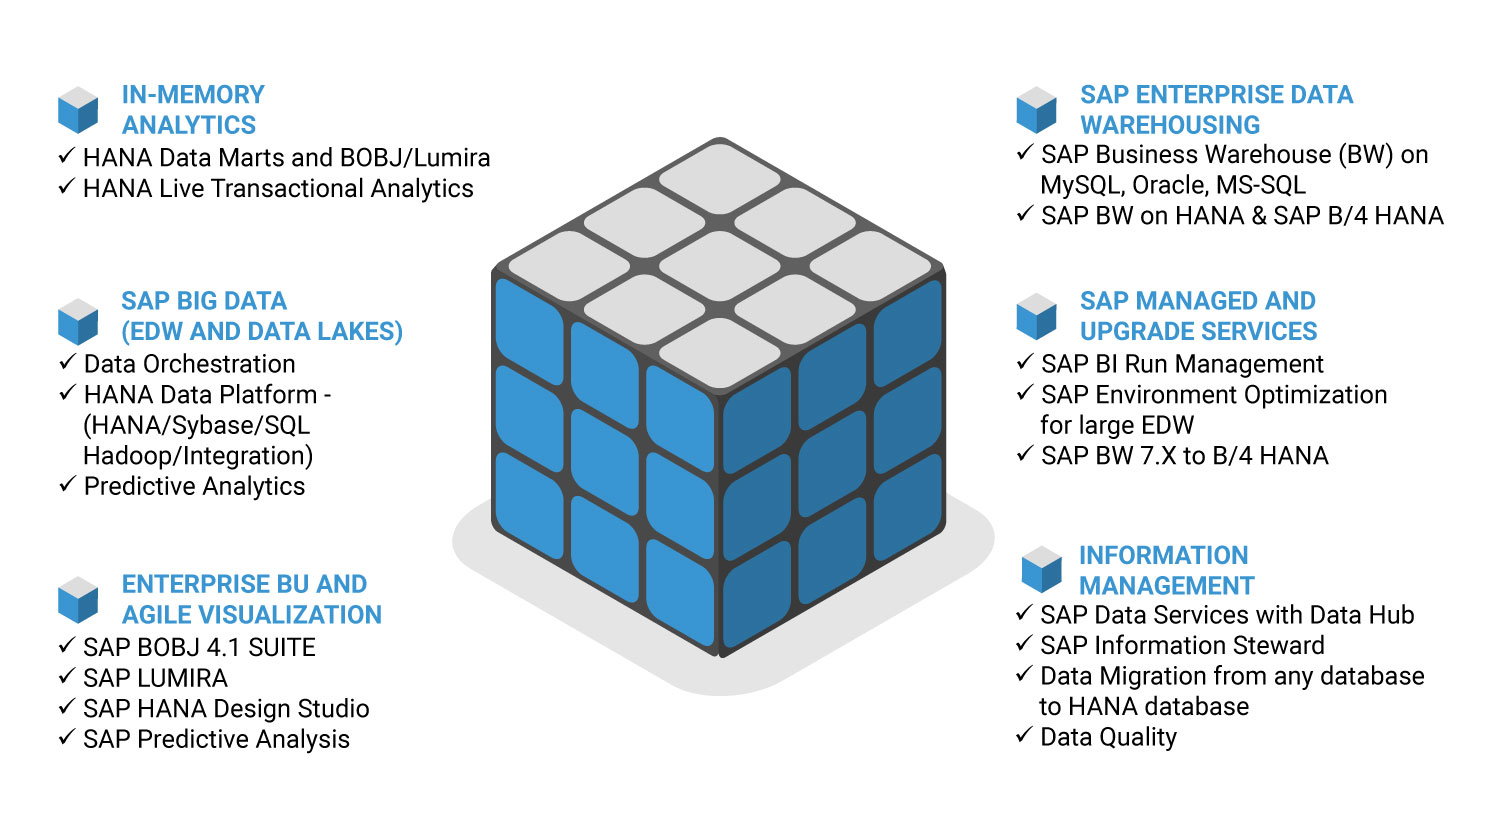 SAP Analytics Services